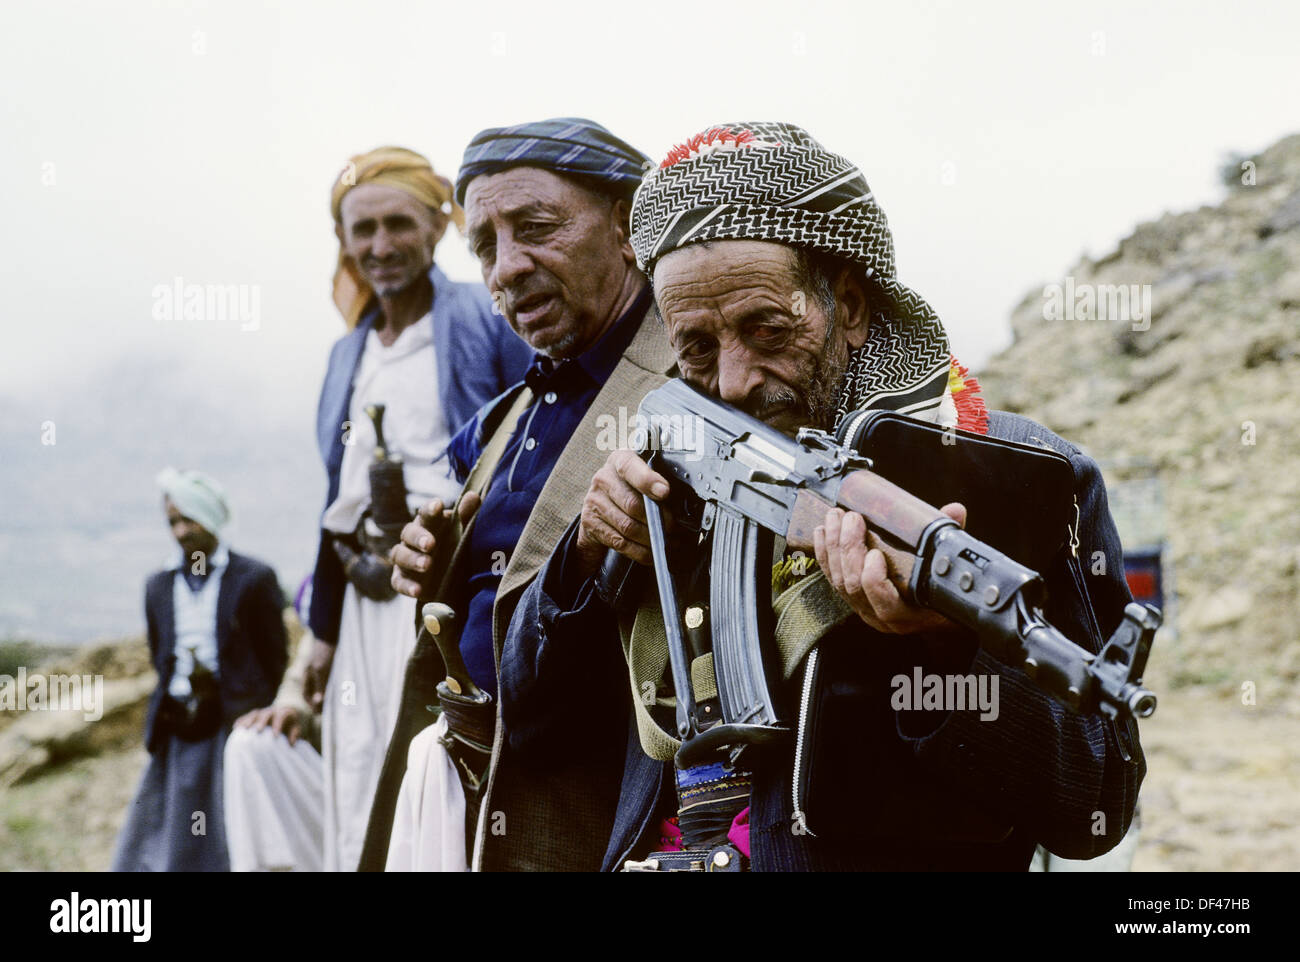 Men of the village, Attawila area, Yemen, Arabia Stock Photo